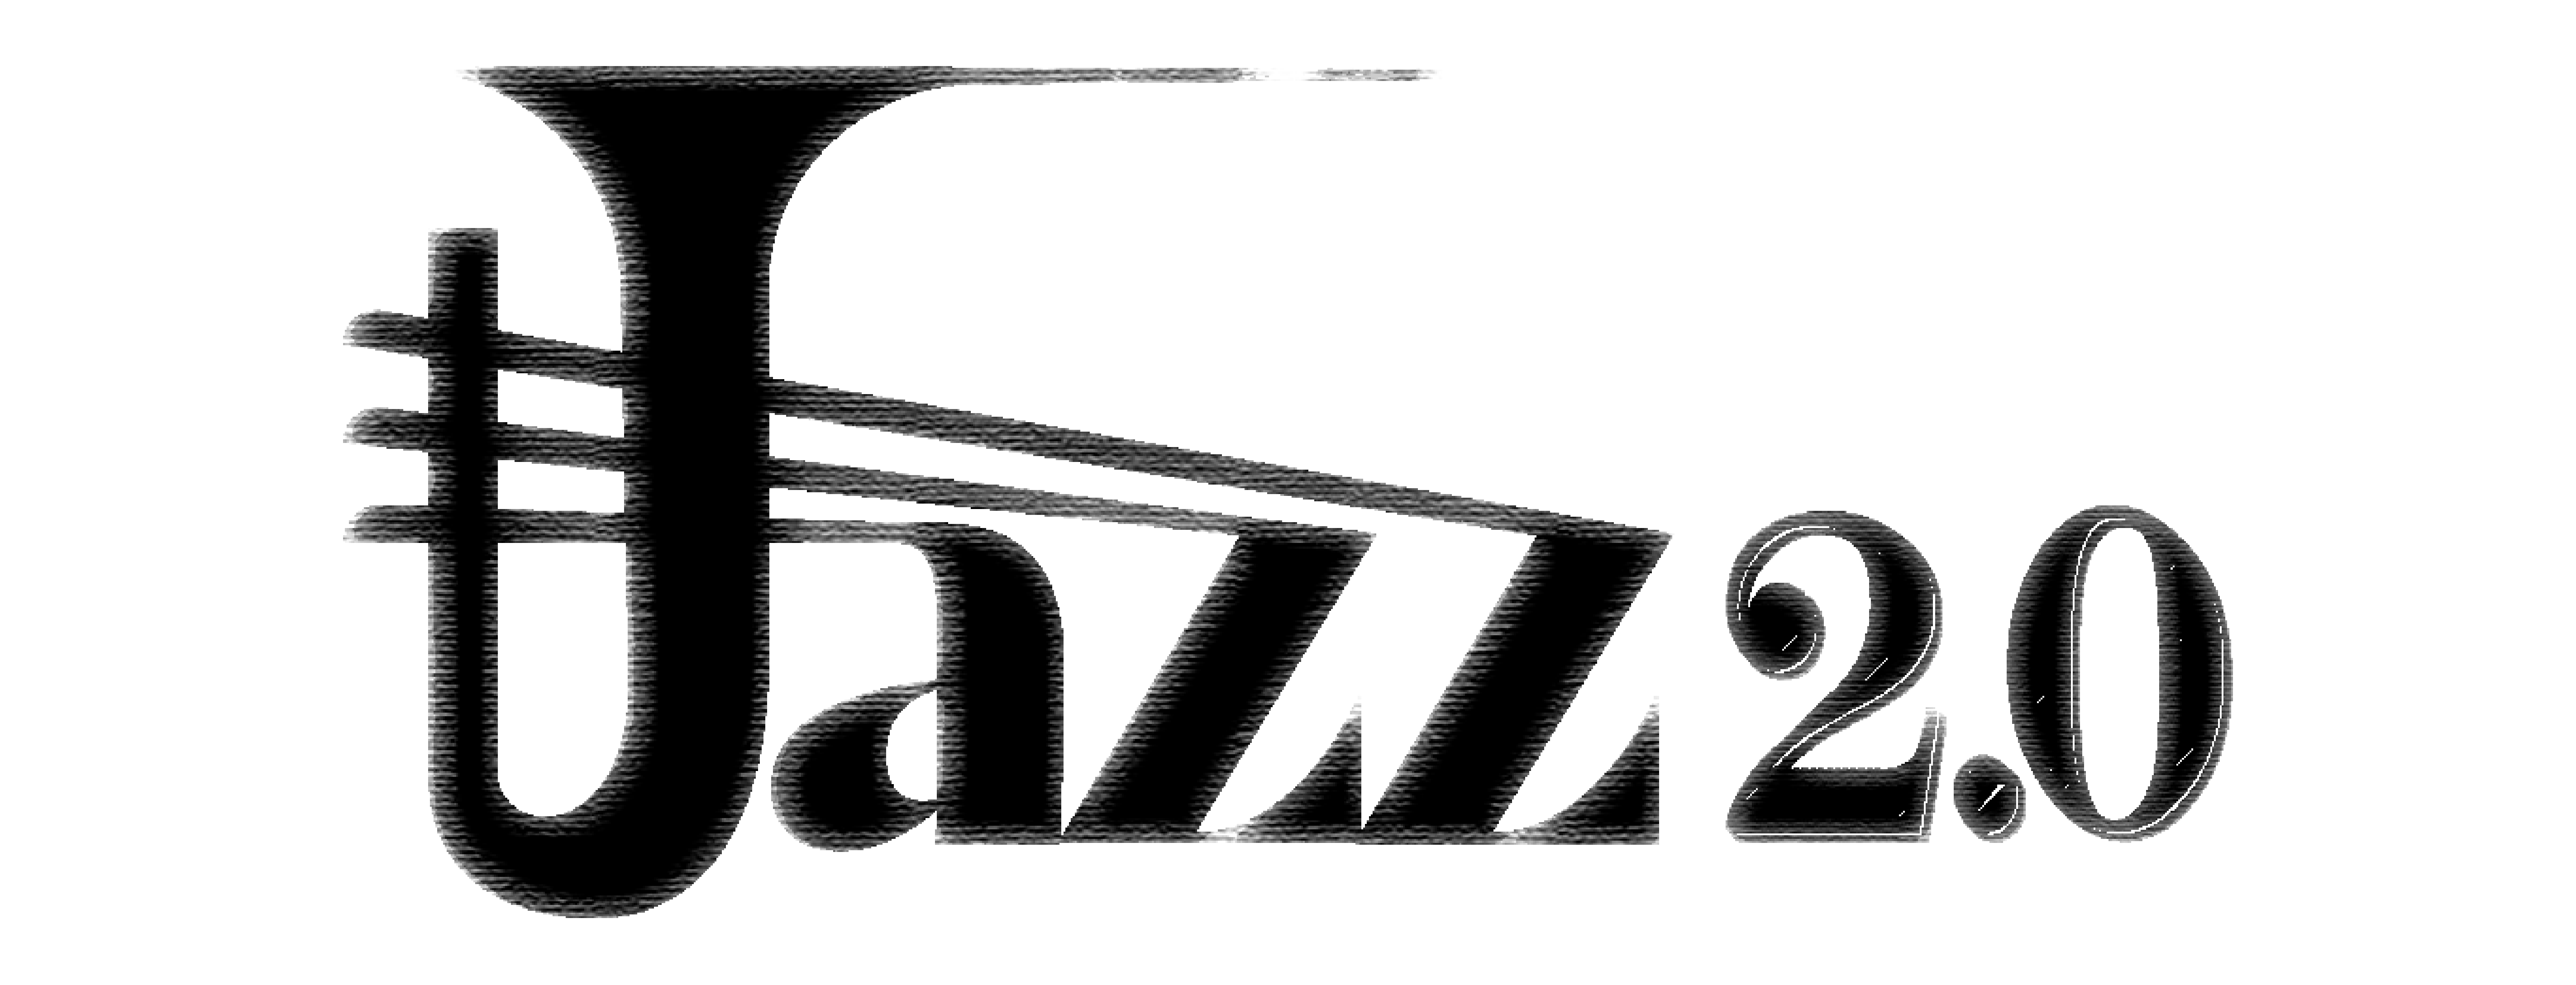 Jazz2.0